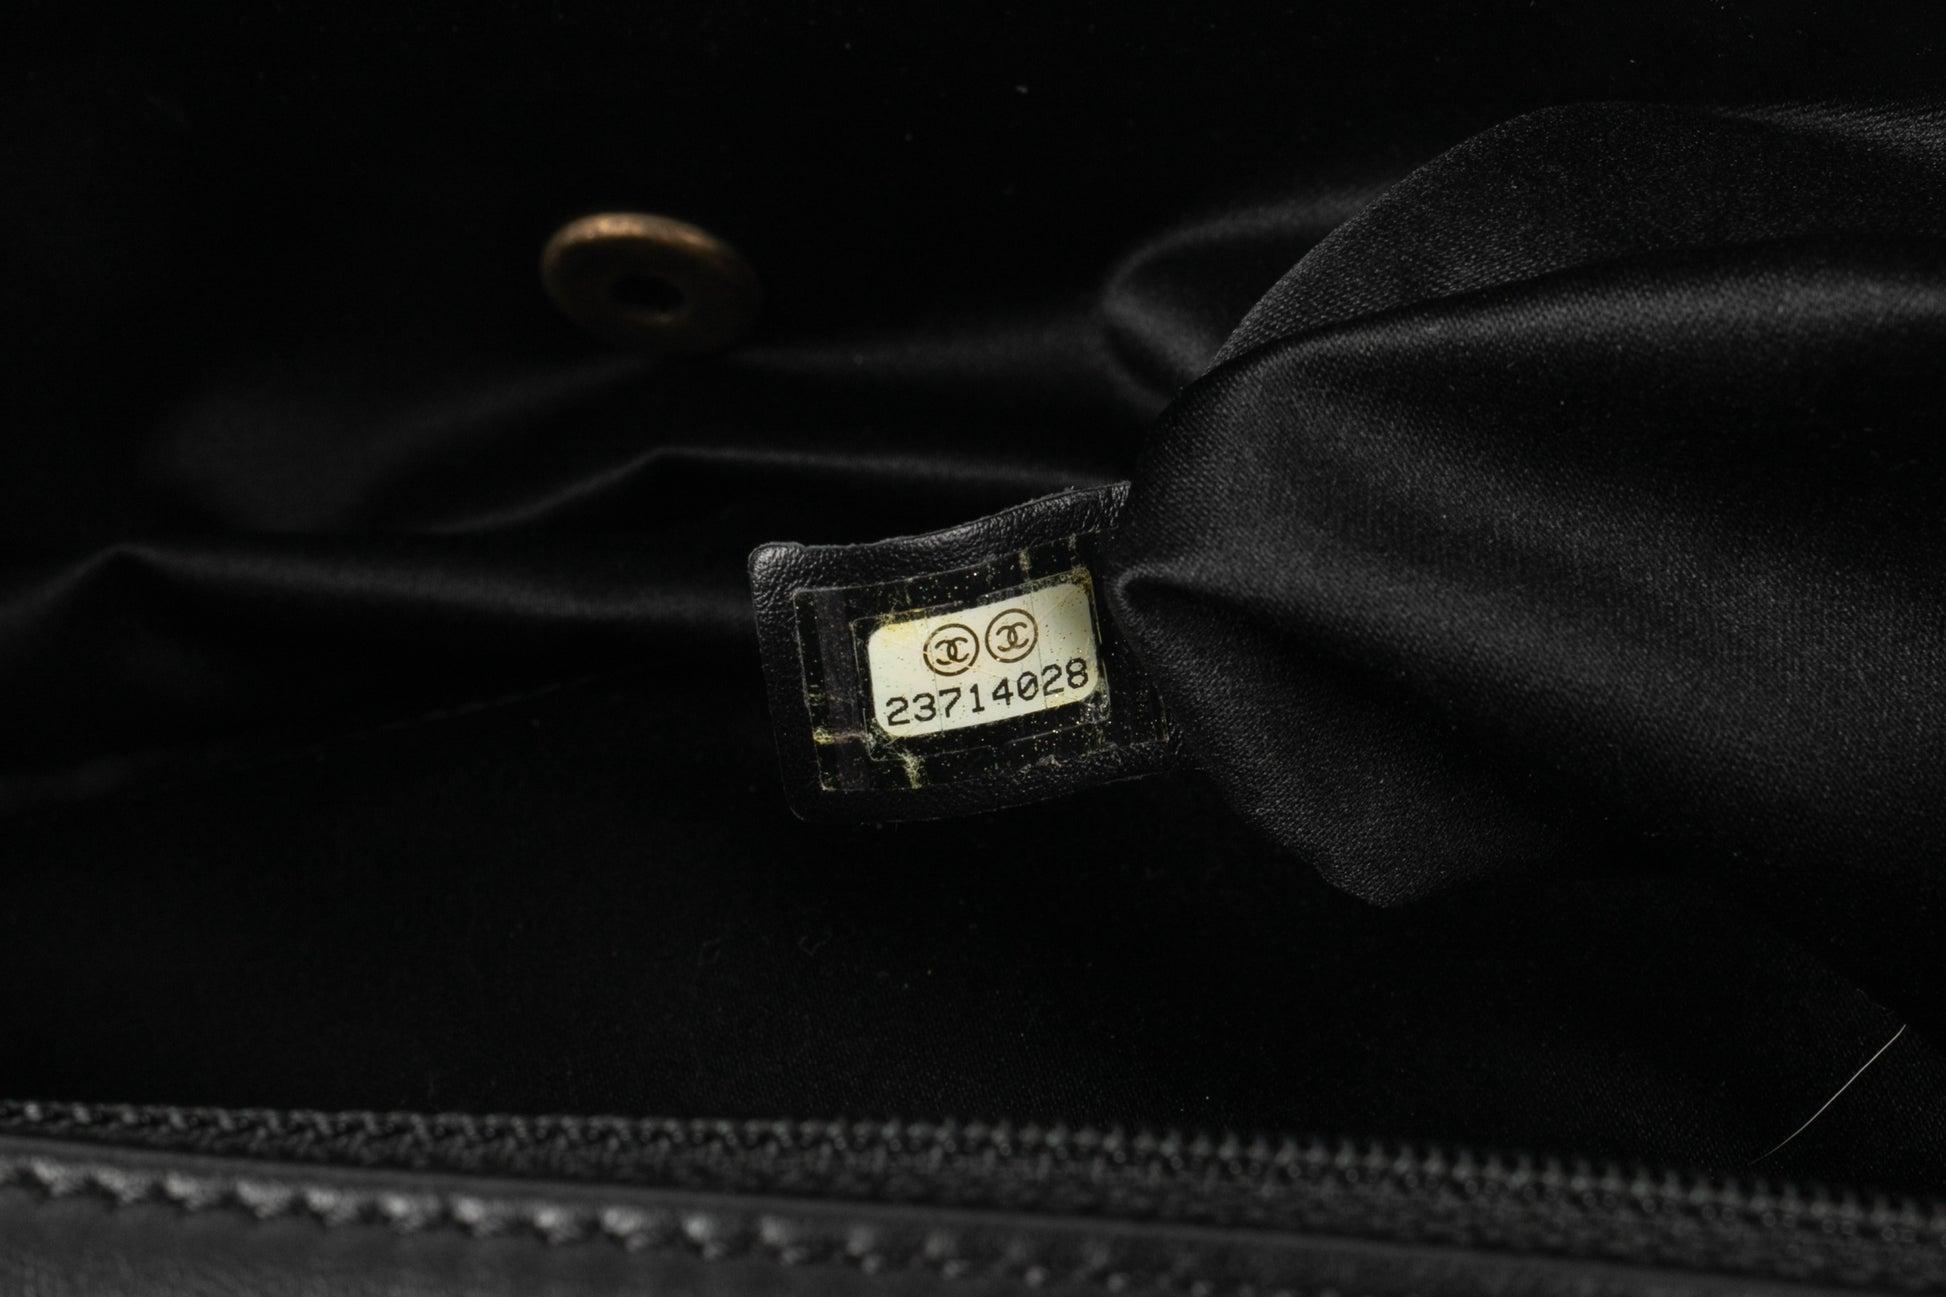 Chanel Timeless Bag Covered in Sequins, Black Leather & Gold Metal Details, 2017 7